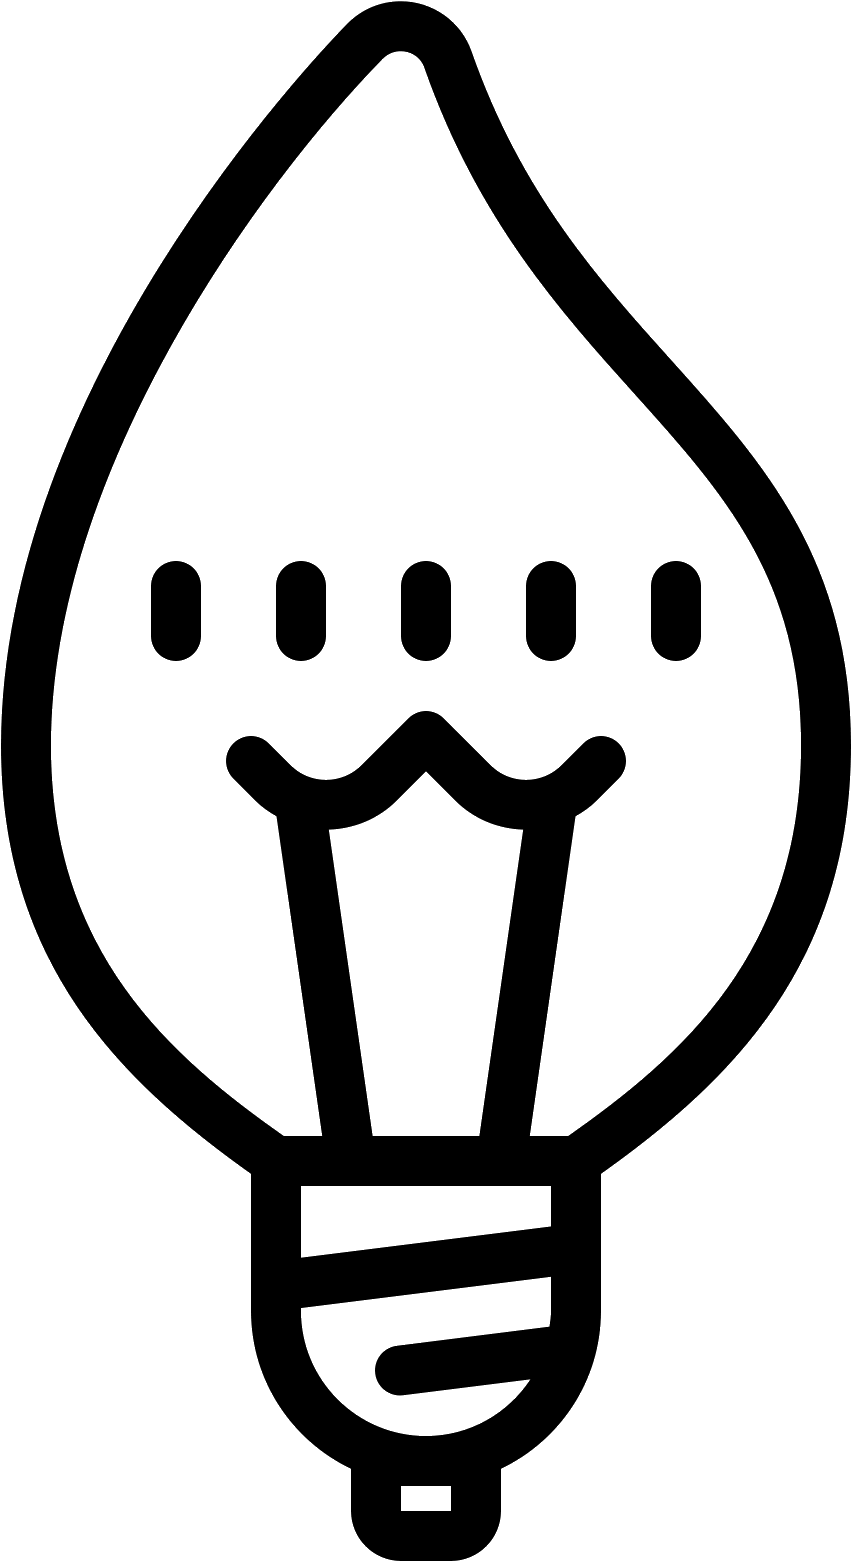 Żarówka Świecowa Icon - Incandescent Light Bulb (1600x1600), Png Download